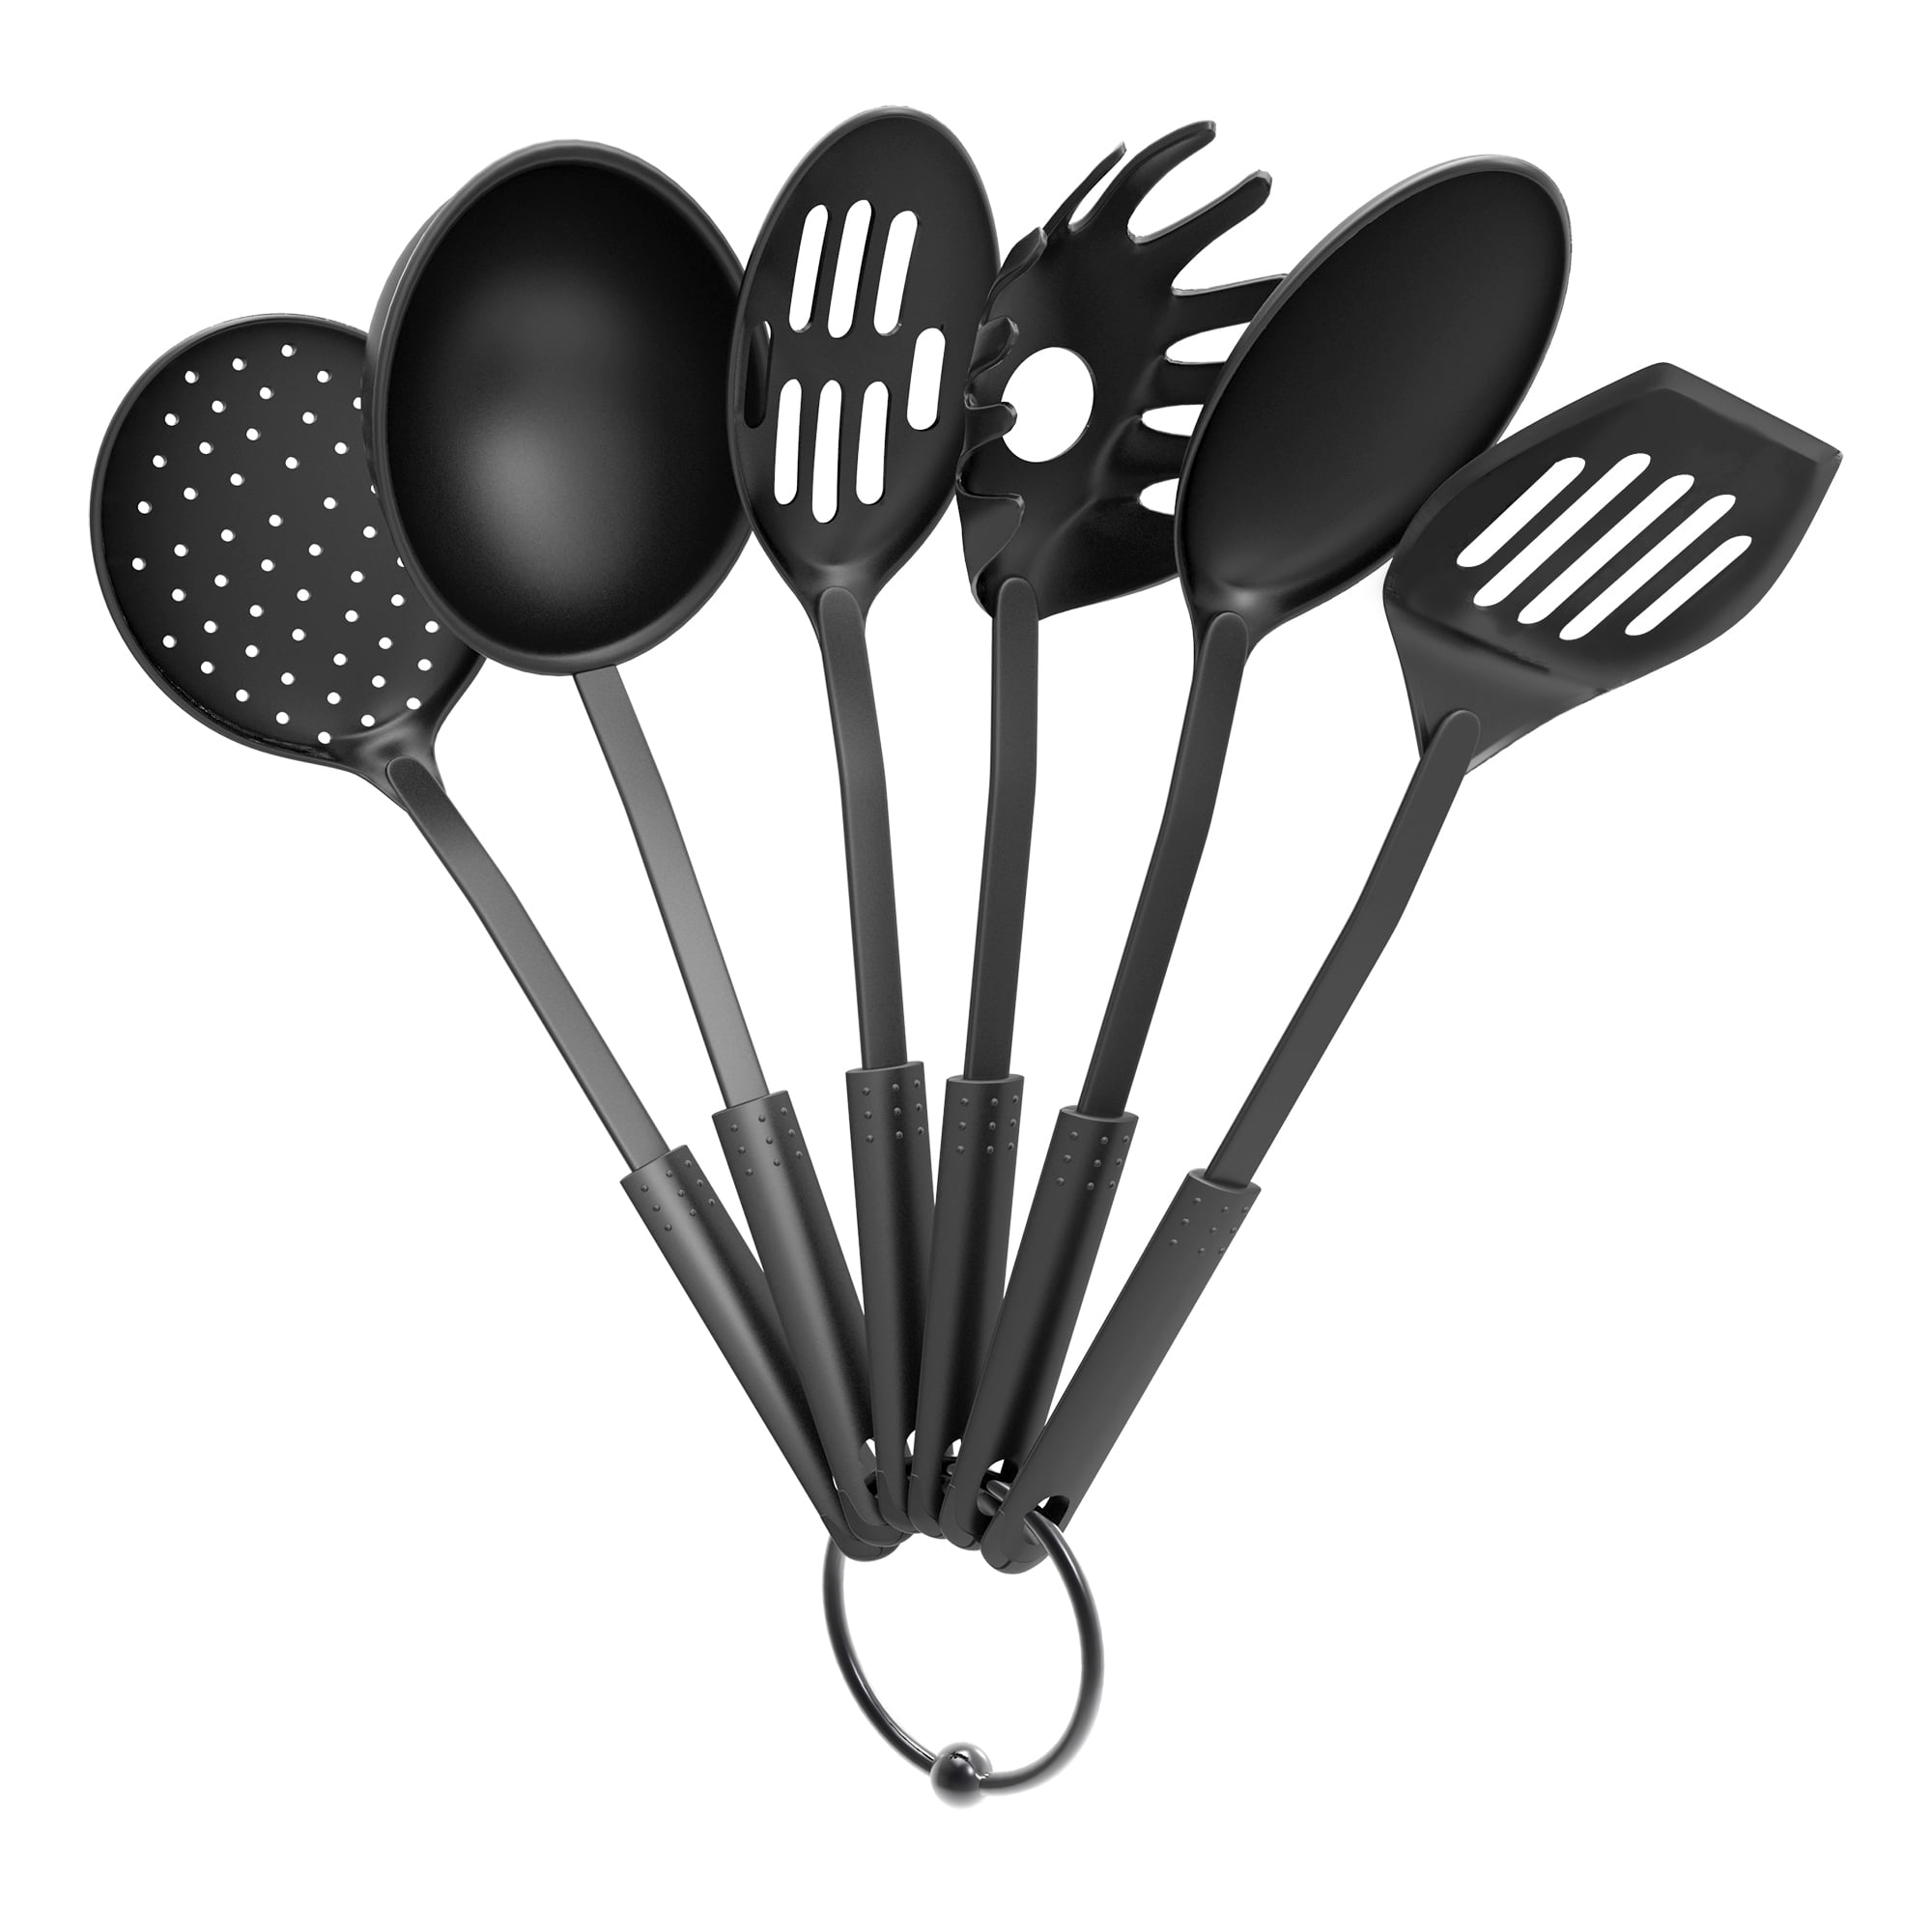 spatula NEW Cooking Kitchen Utensils 6 Piece Set / Spoons Pasta ladle skimmer